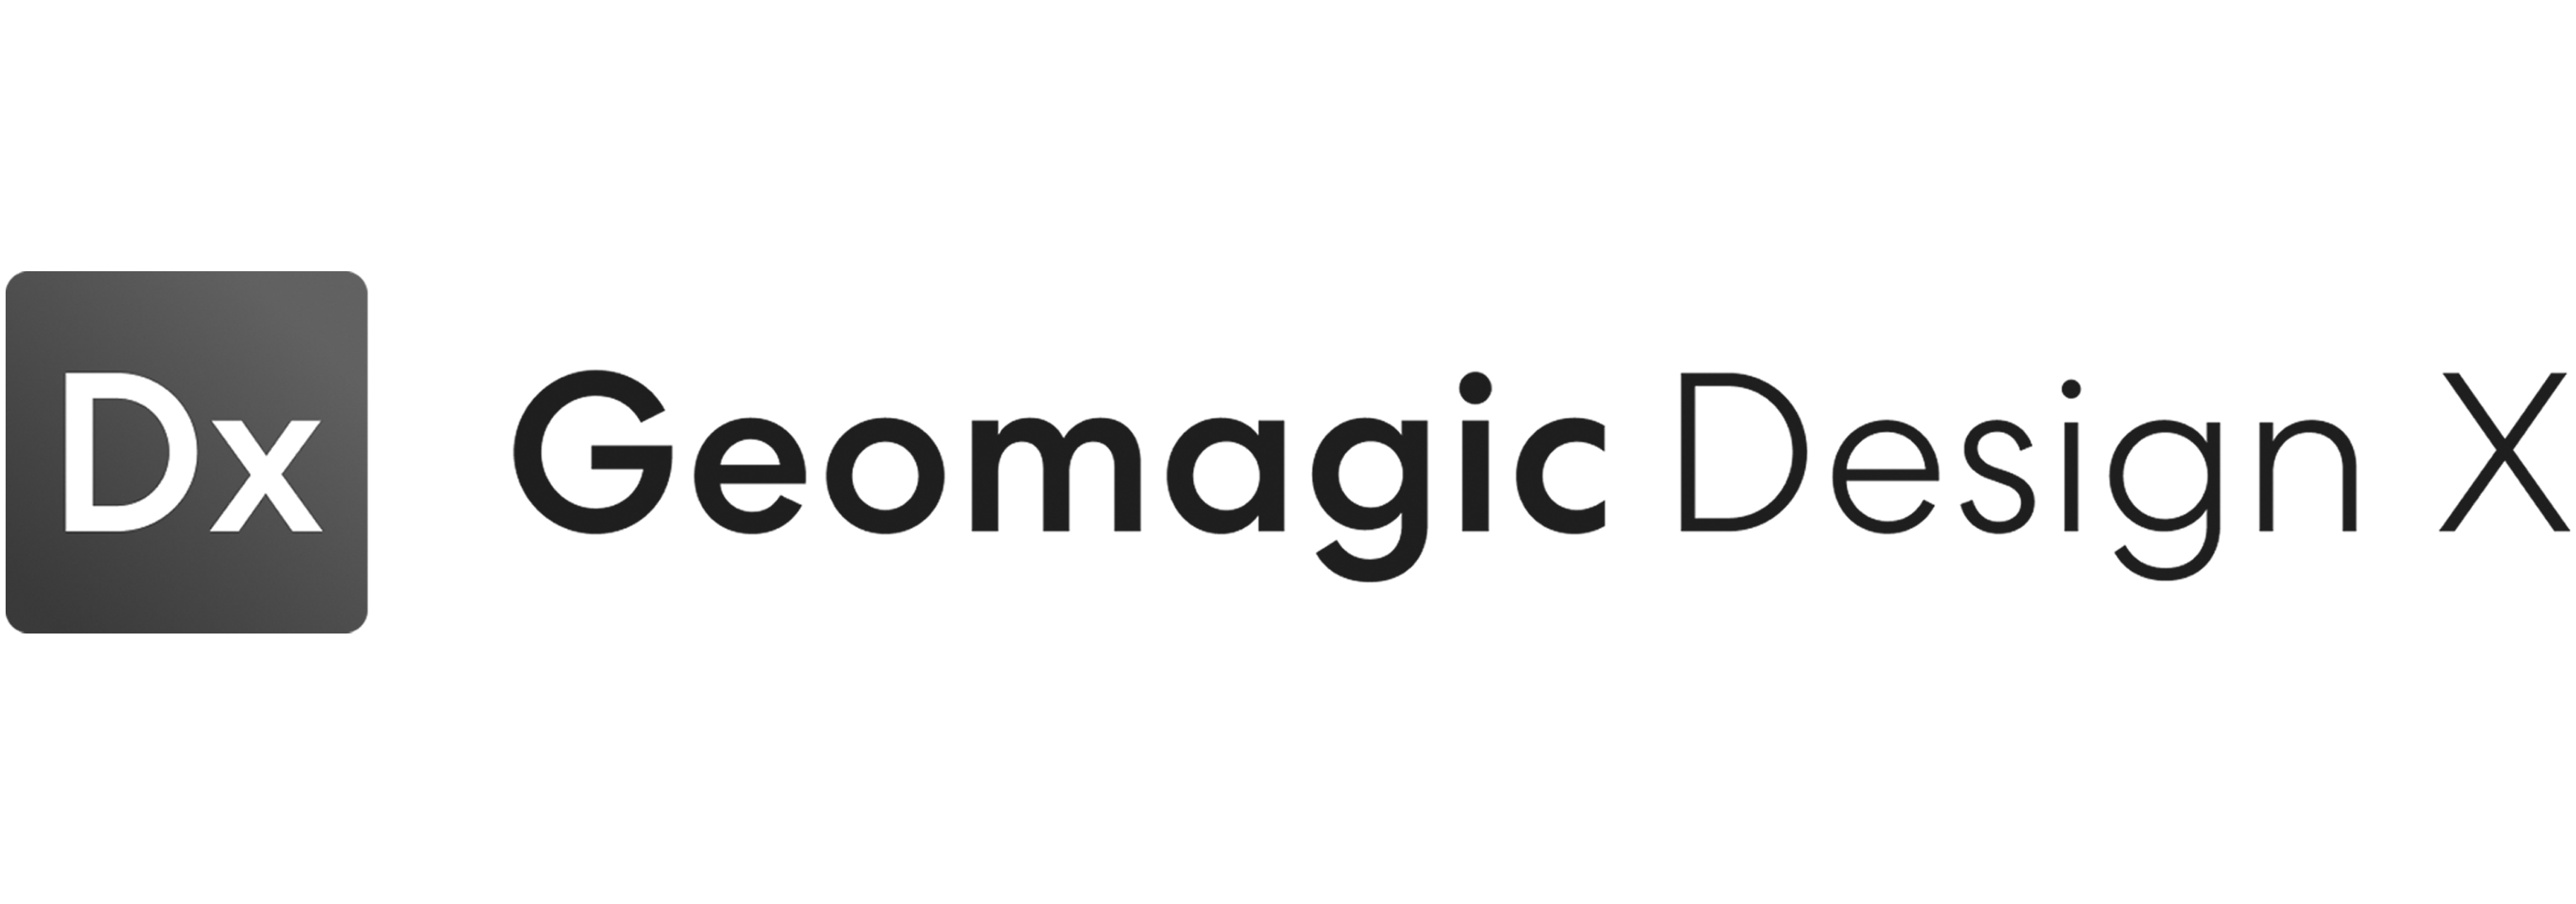 geomagic_logo_novo